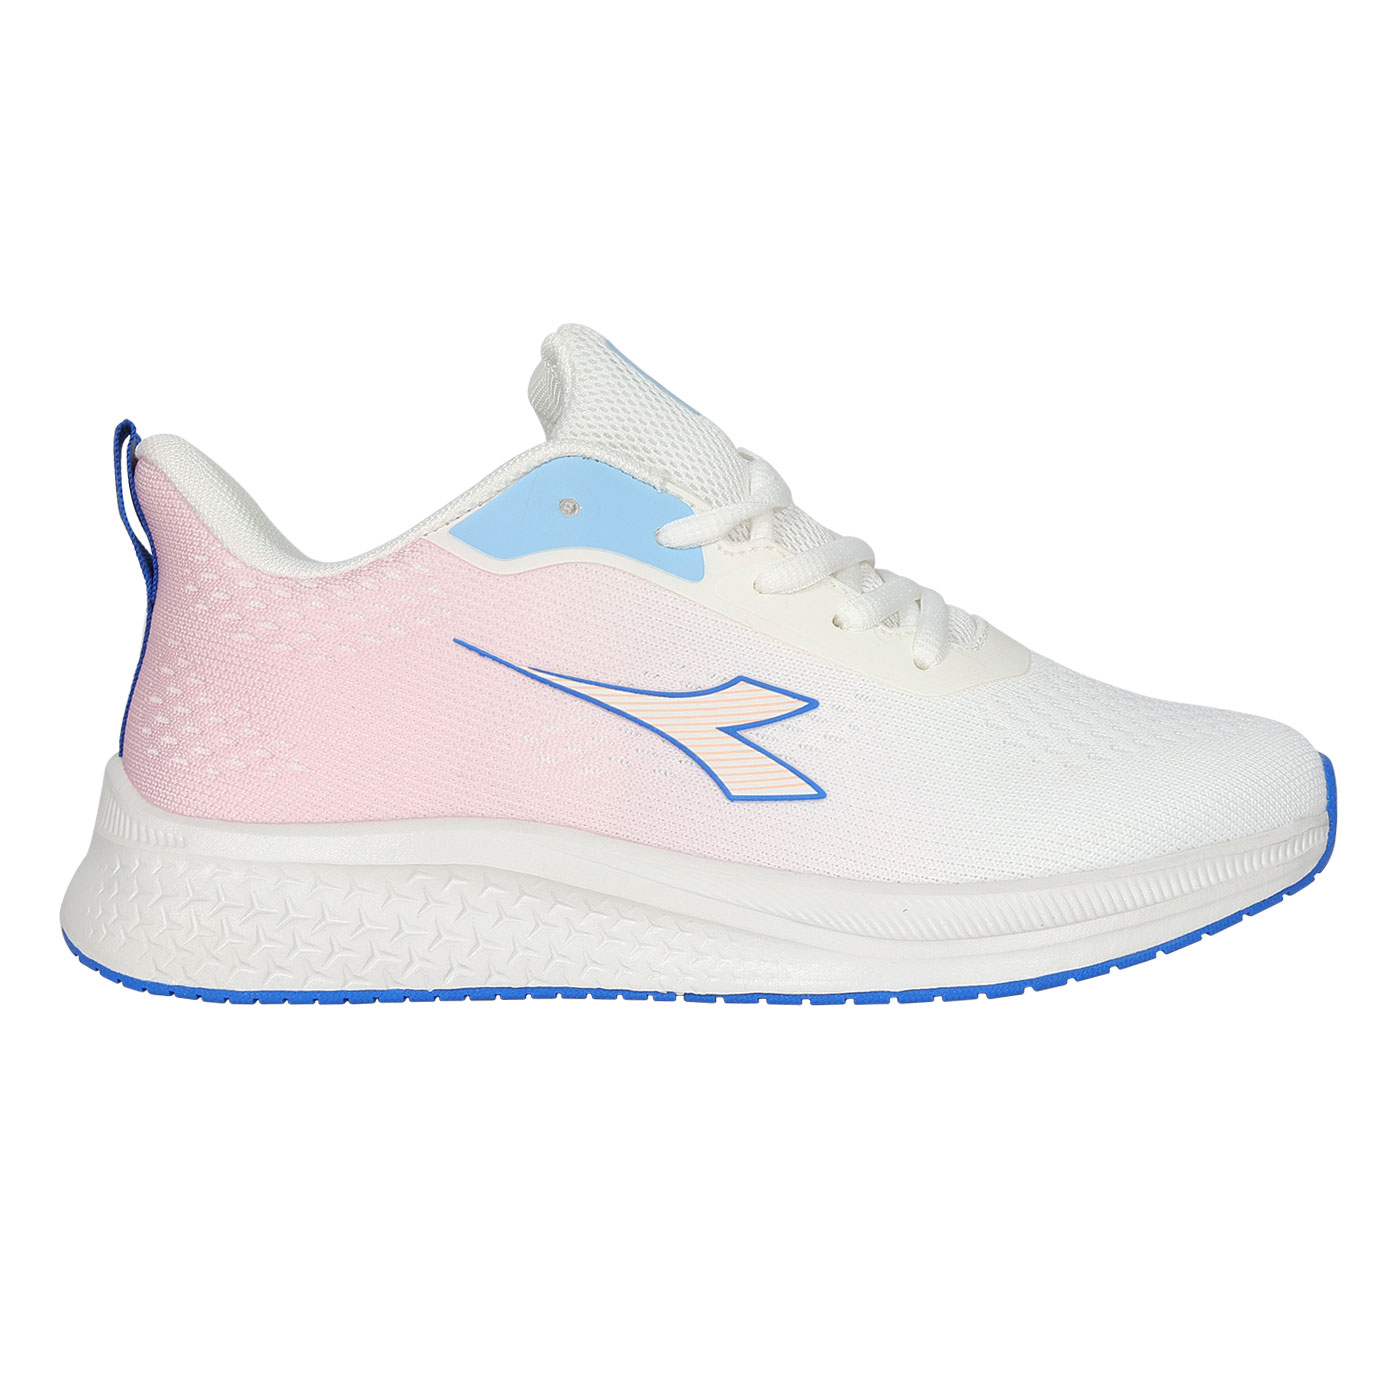 DIADORA 女專業慢跑輕量鞋  DA31752 - 白粉藍